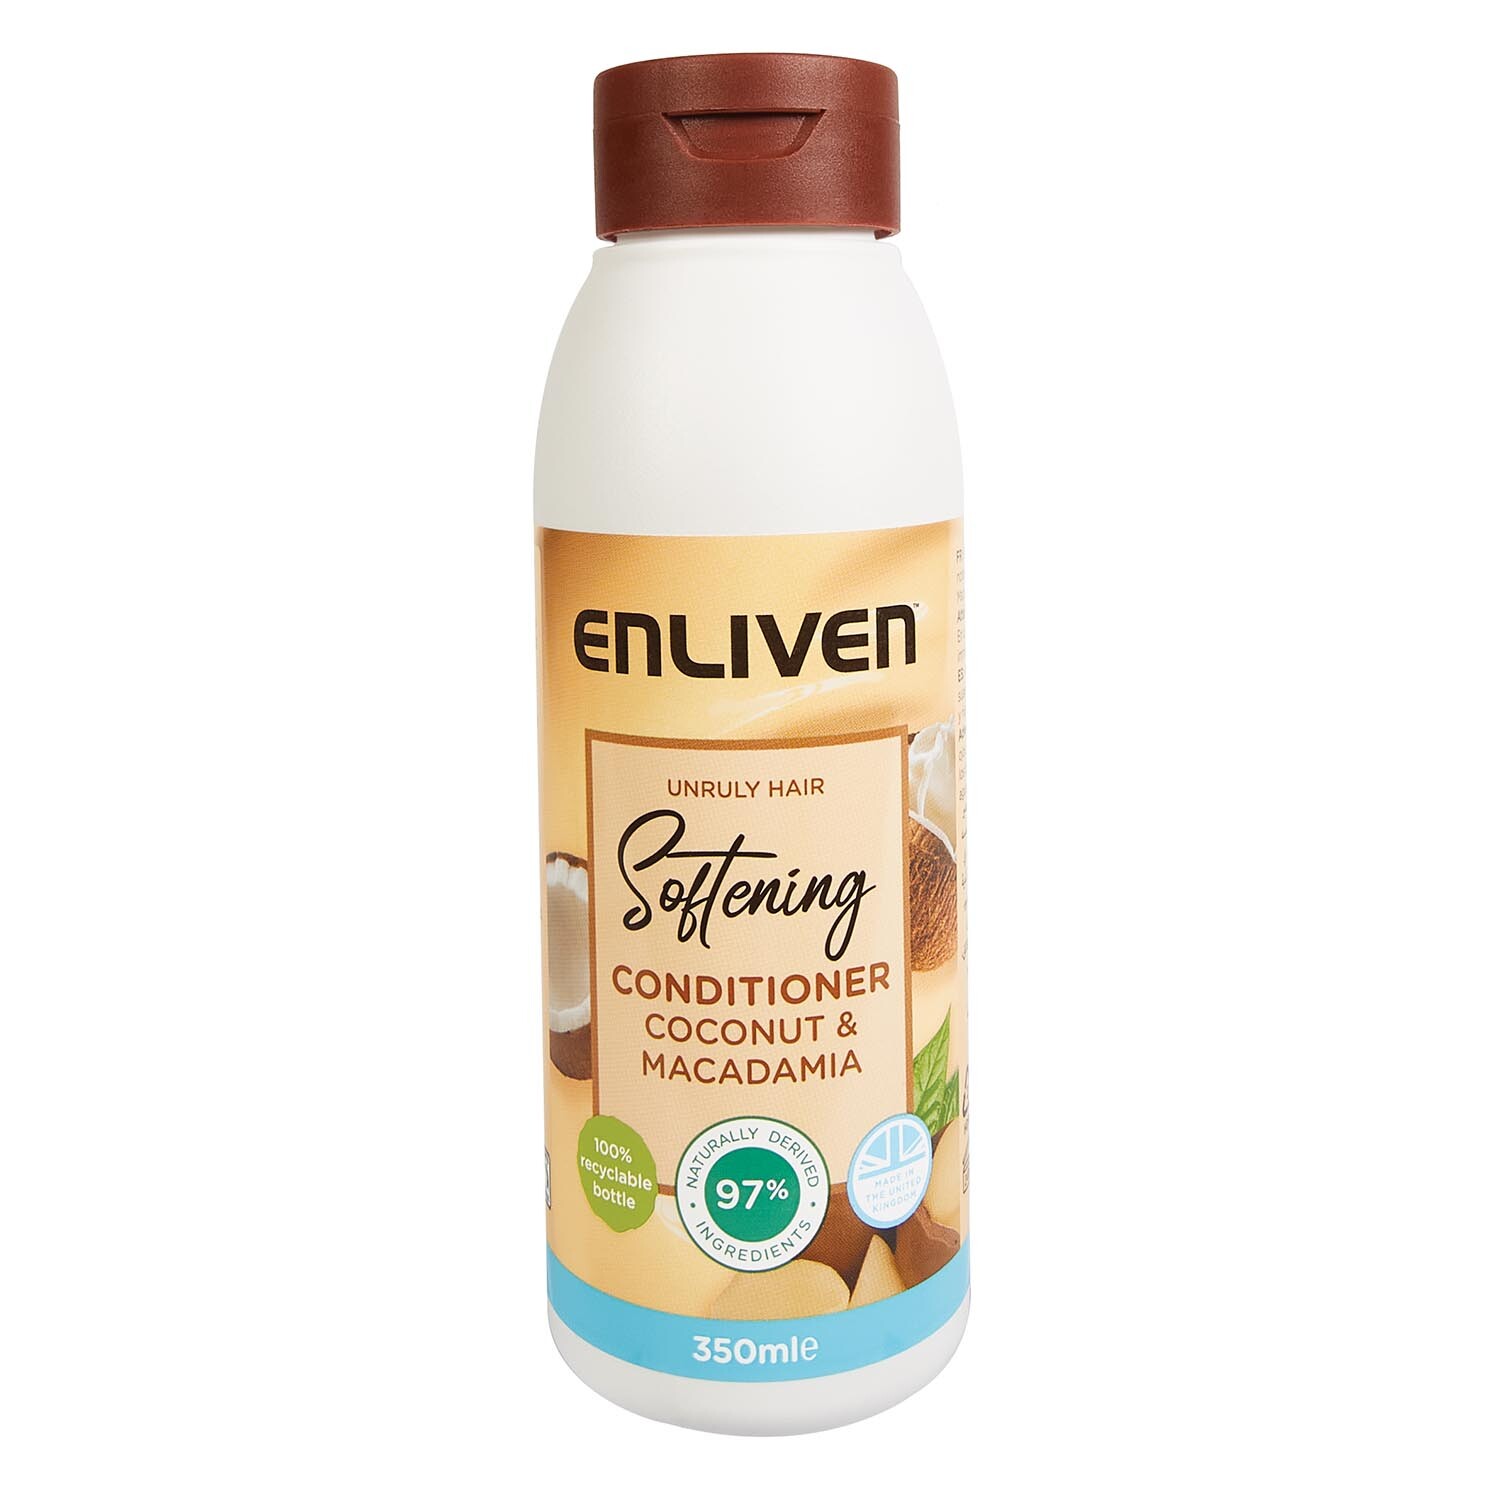 Enliven Softening Coconut and Macadamia Conditioner Image